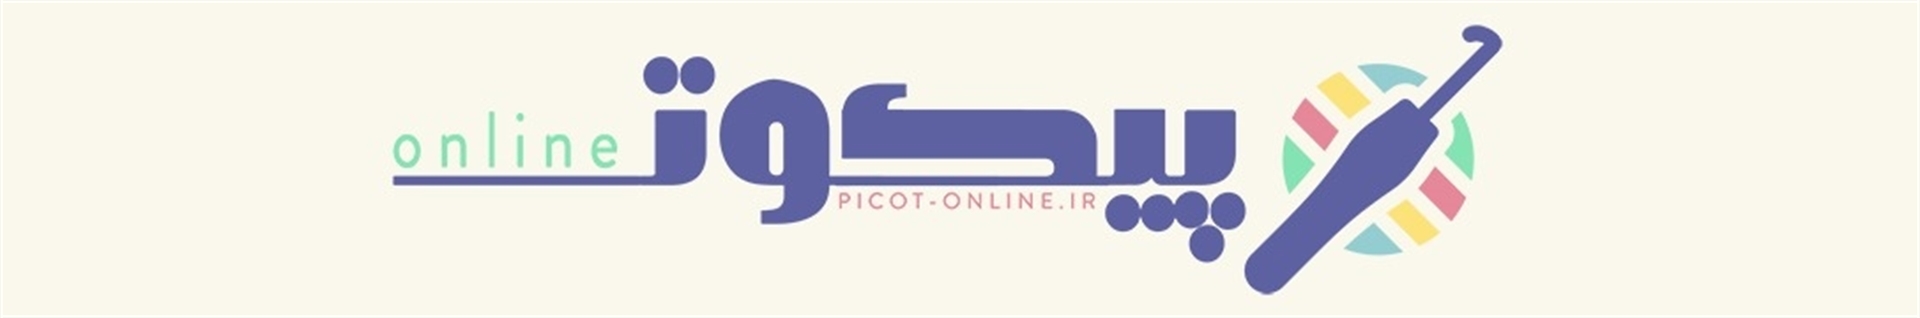 picot-online